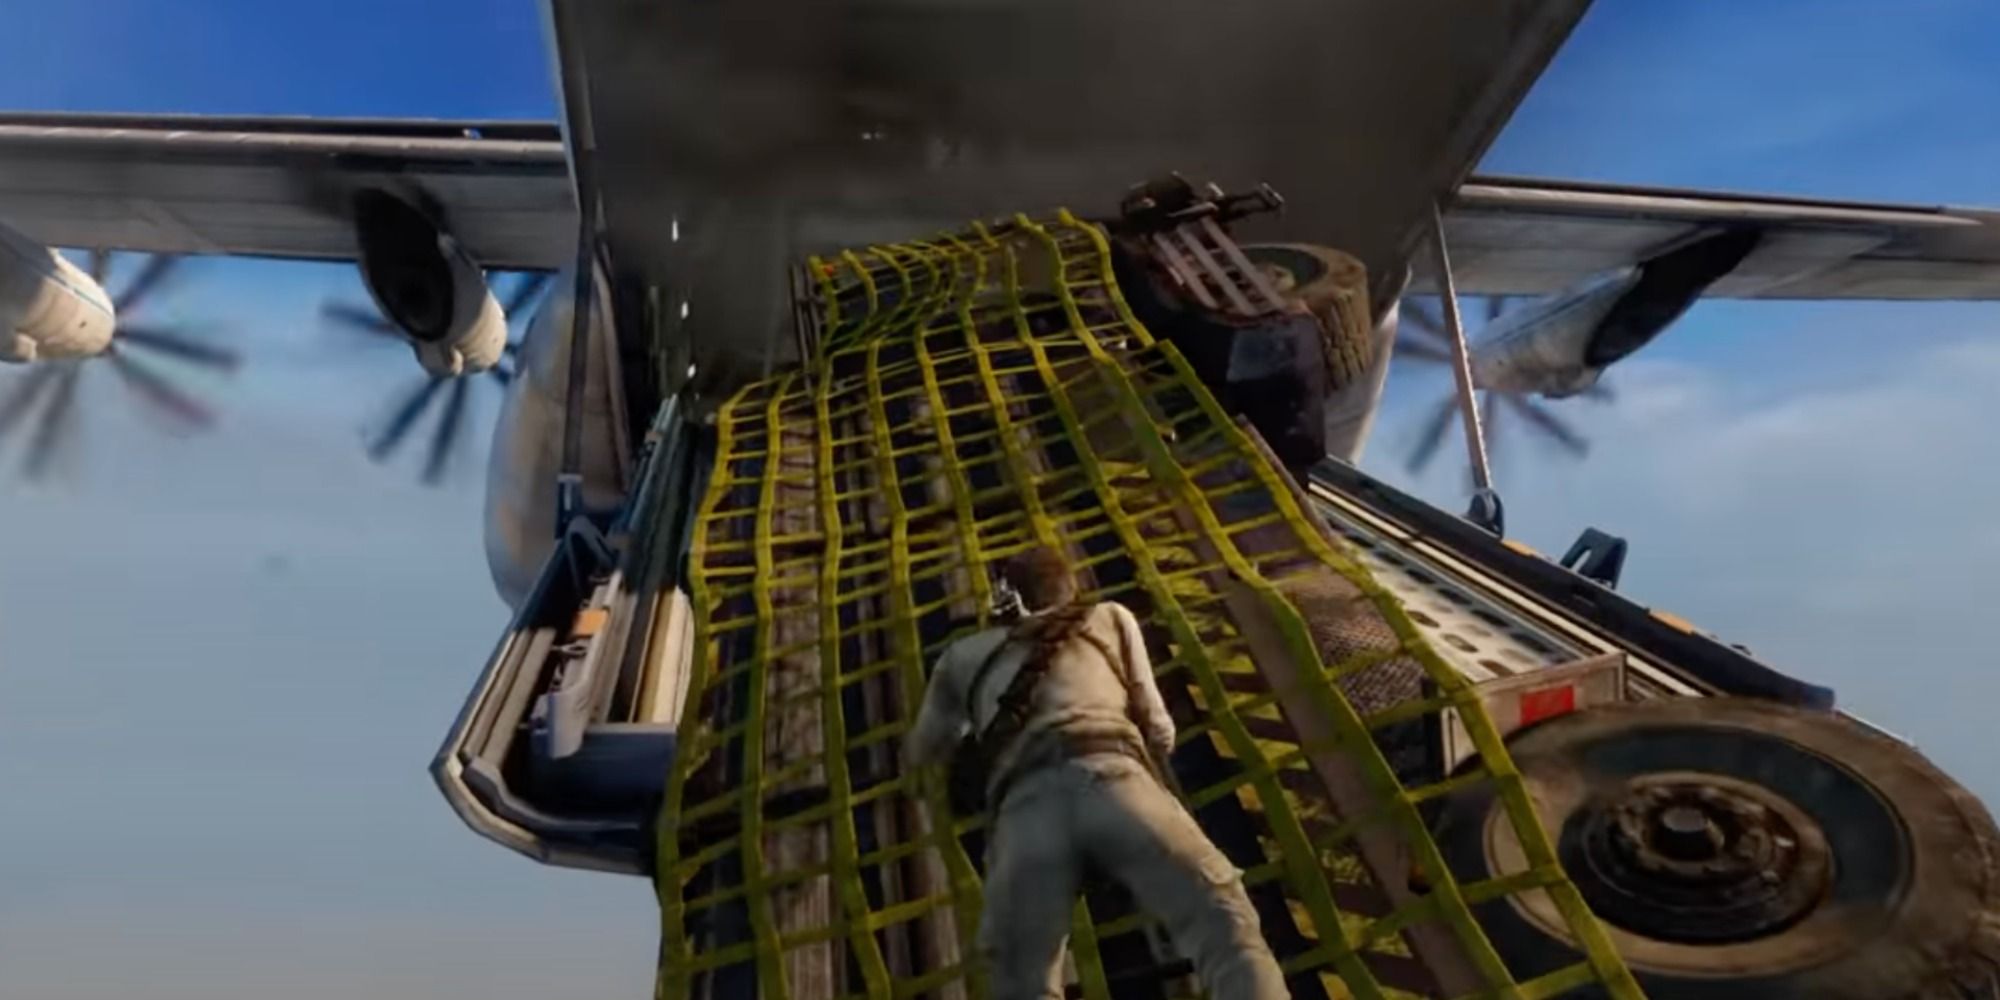 Nathan Drake climbing cargo on plane in mid air.